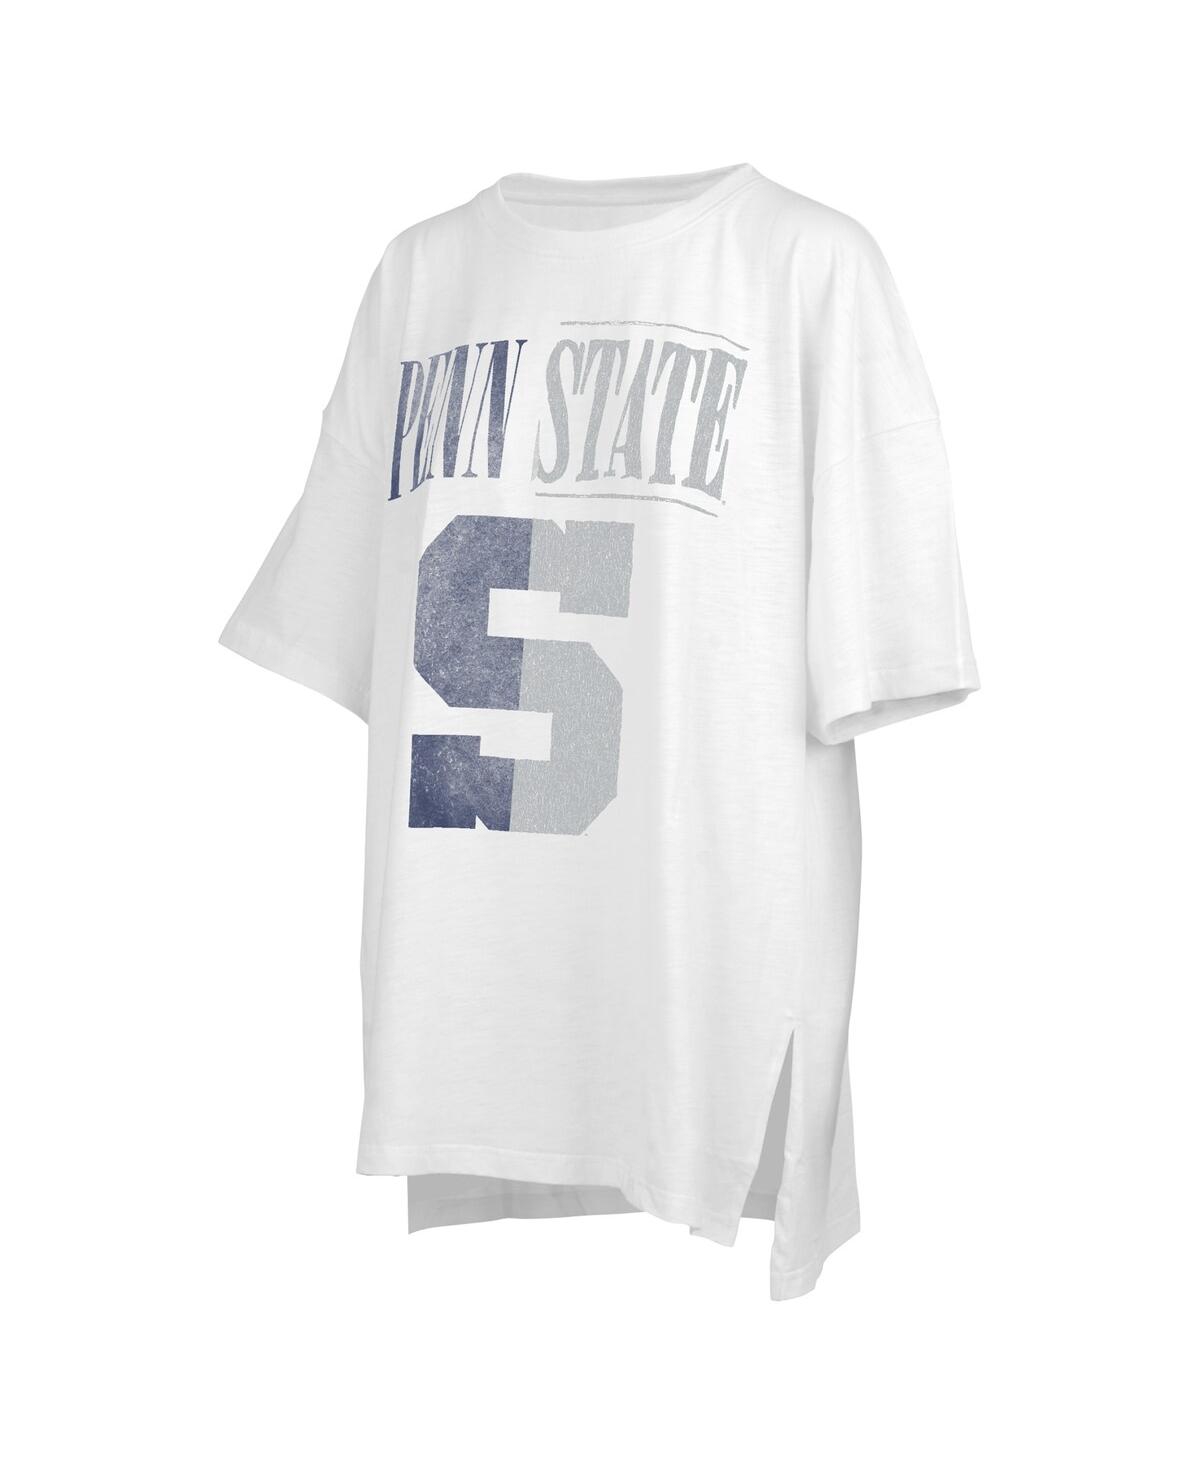 Shop Pressbox Women's  White Distressed Penn State Nittany Lions Lickety-split Oversized T-shirt